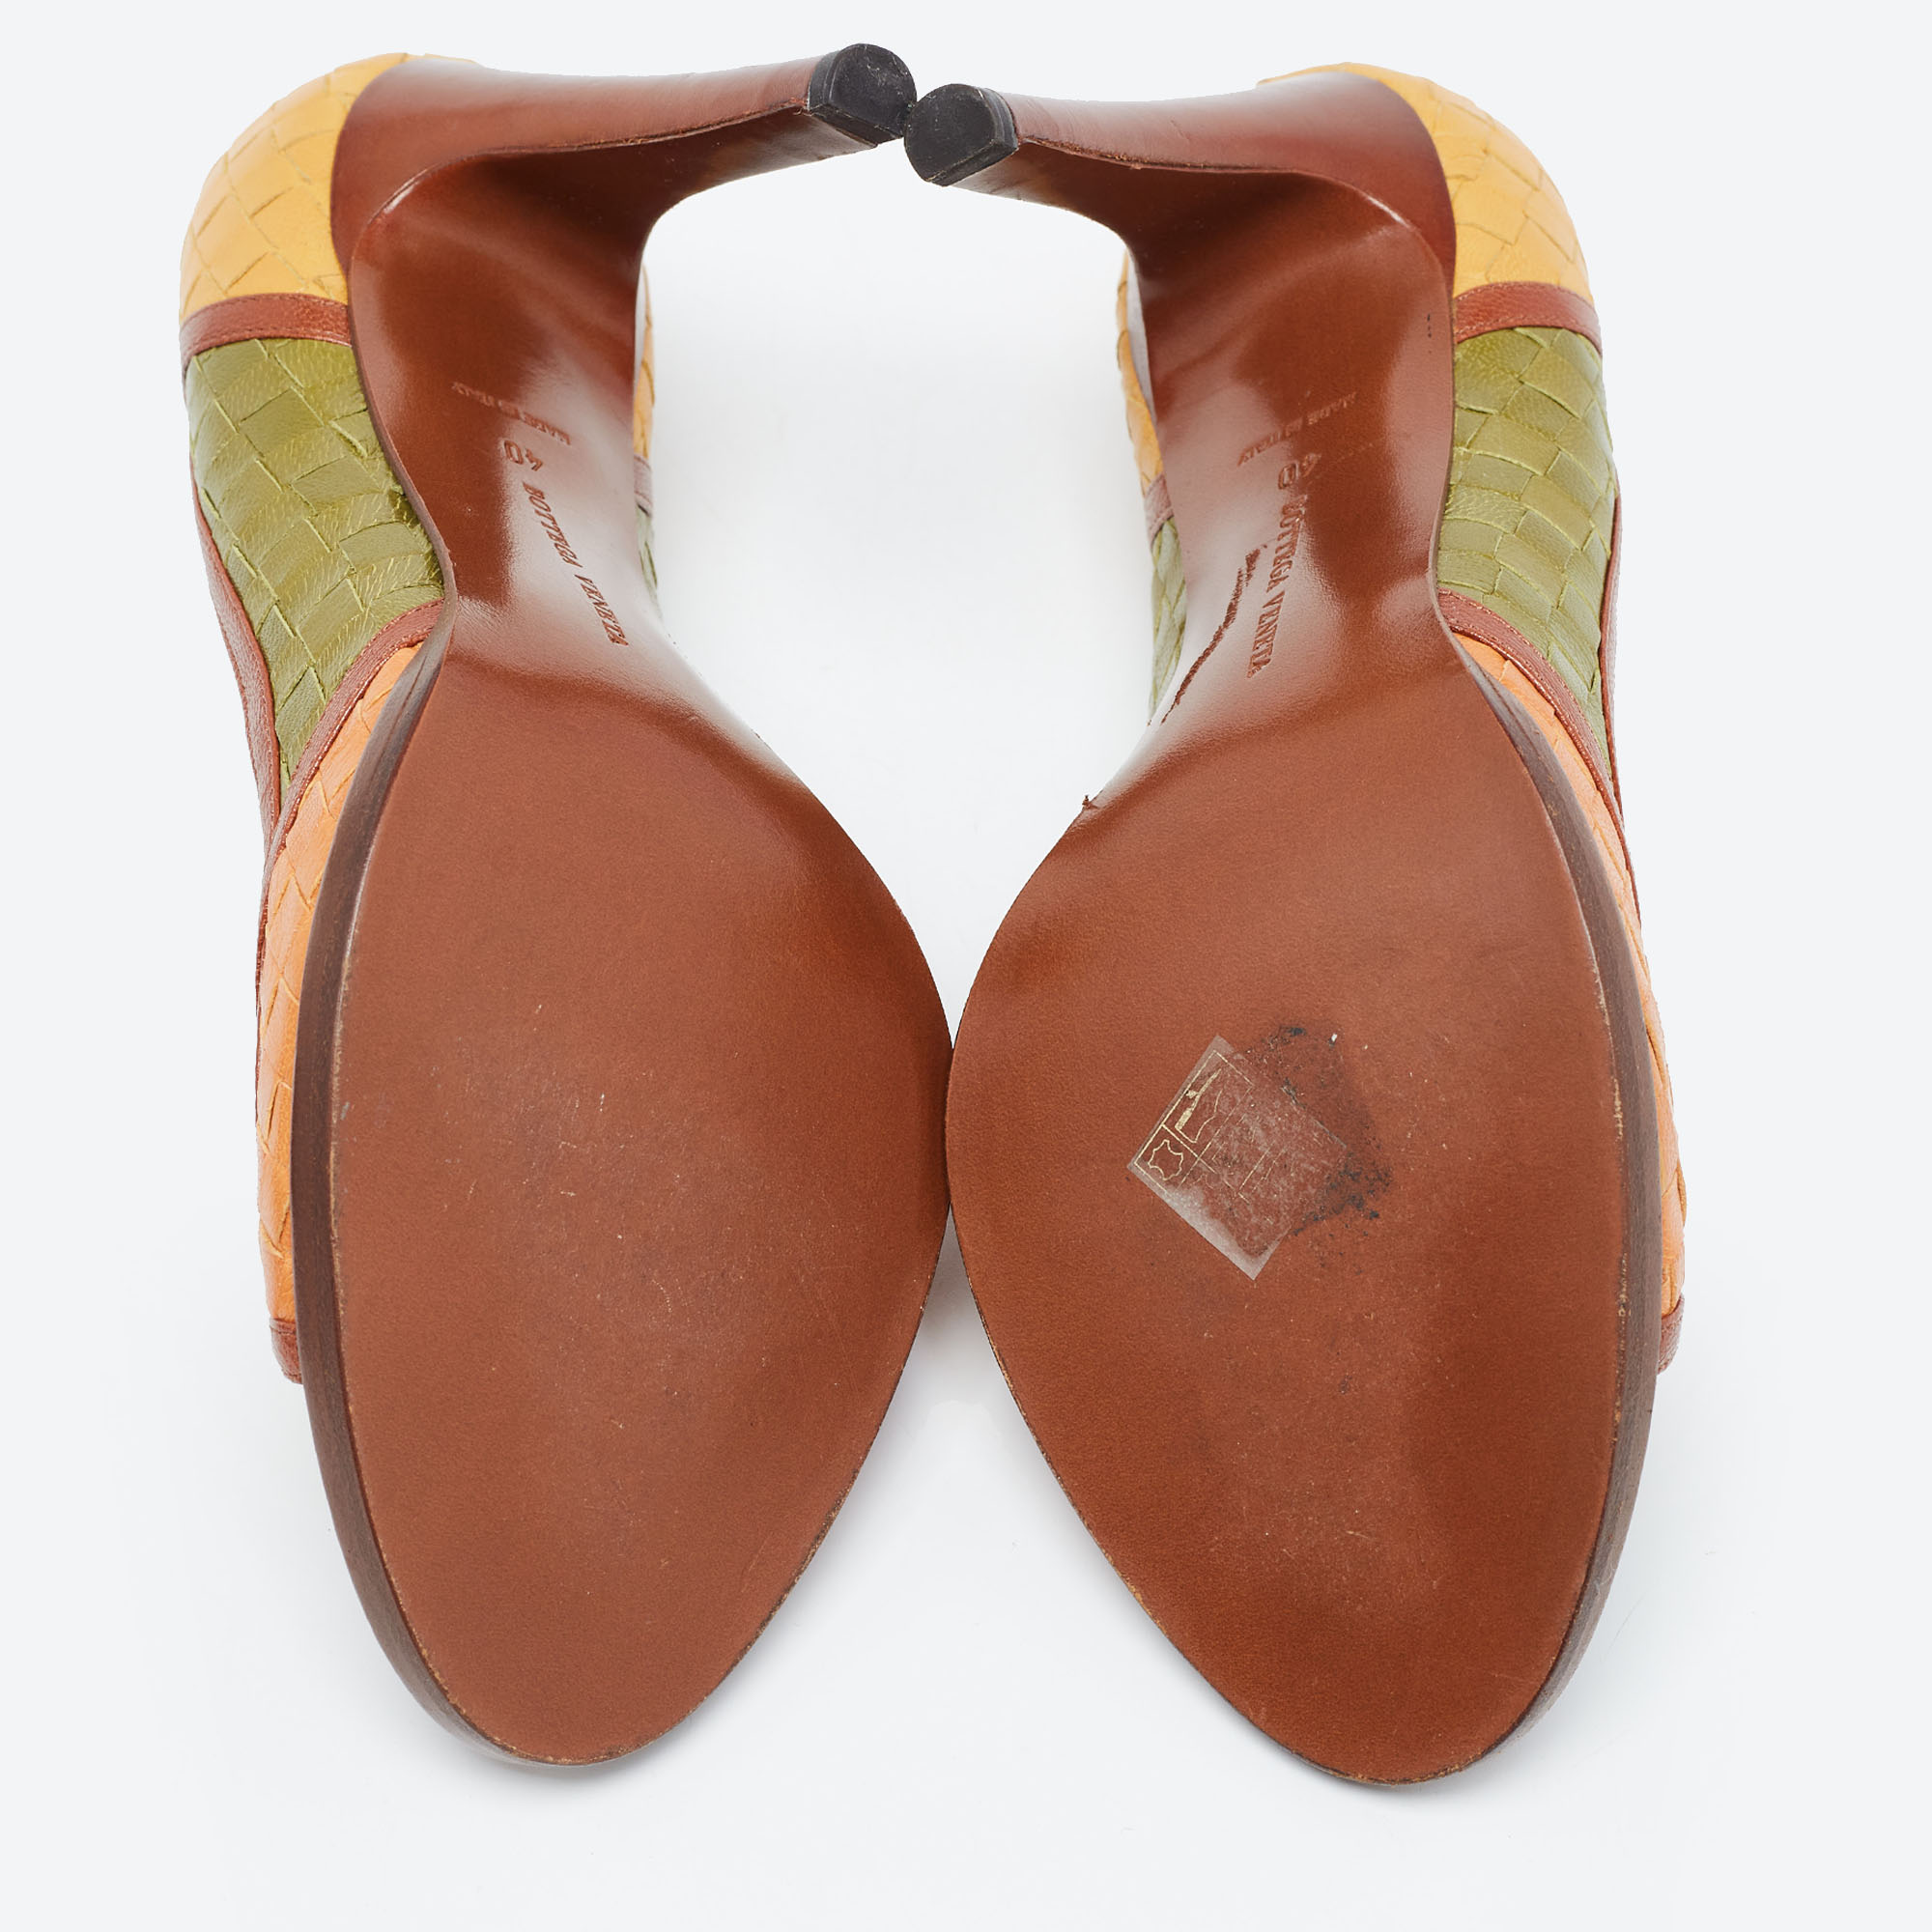 Bottega Veneta Multicolor Woven Leather Peep Toe Pumps Size 40